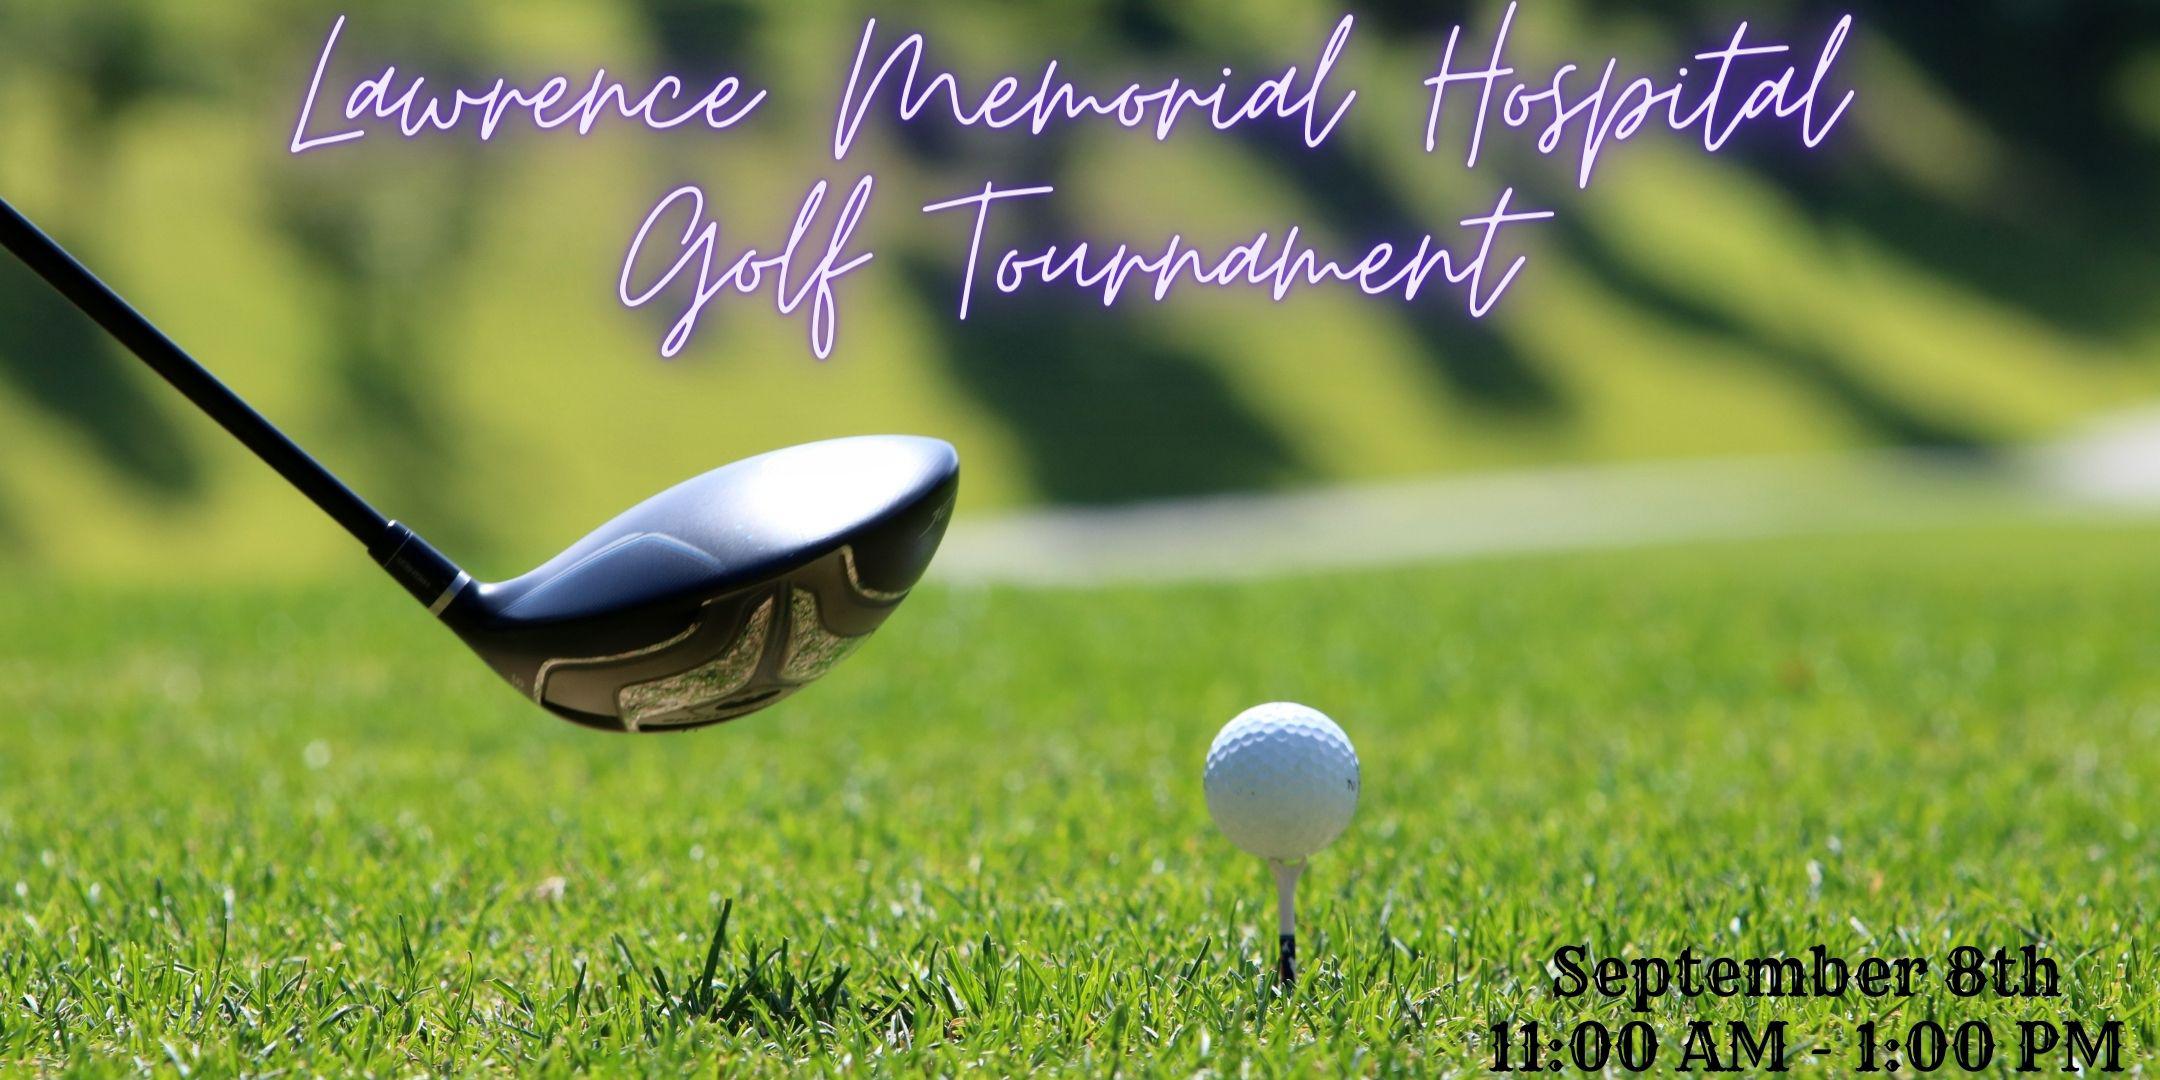 Lawrence Memorial Hospital Golf Tournament